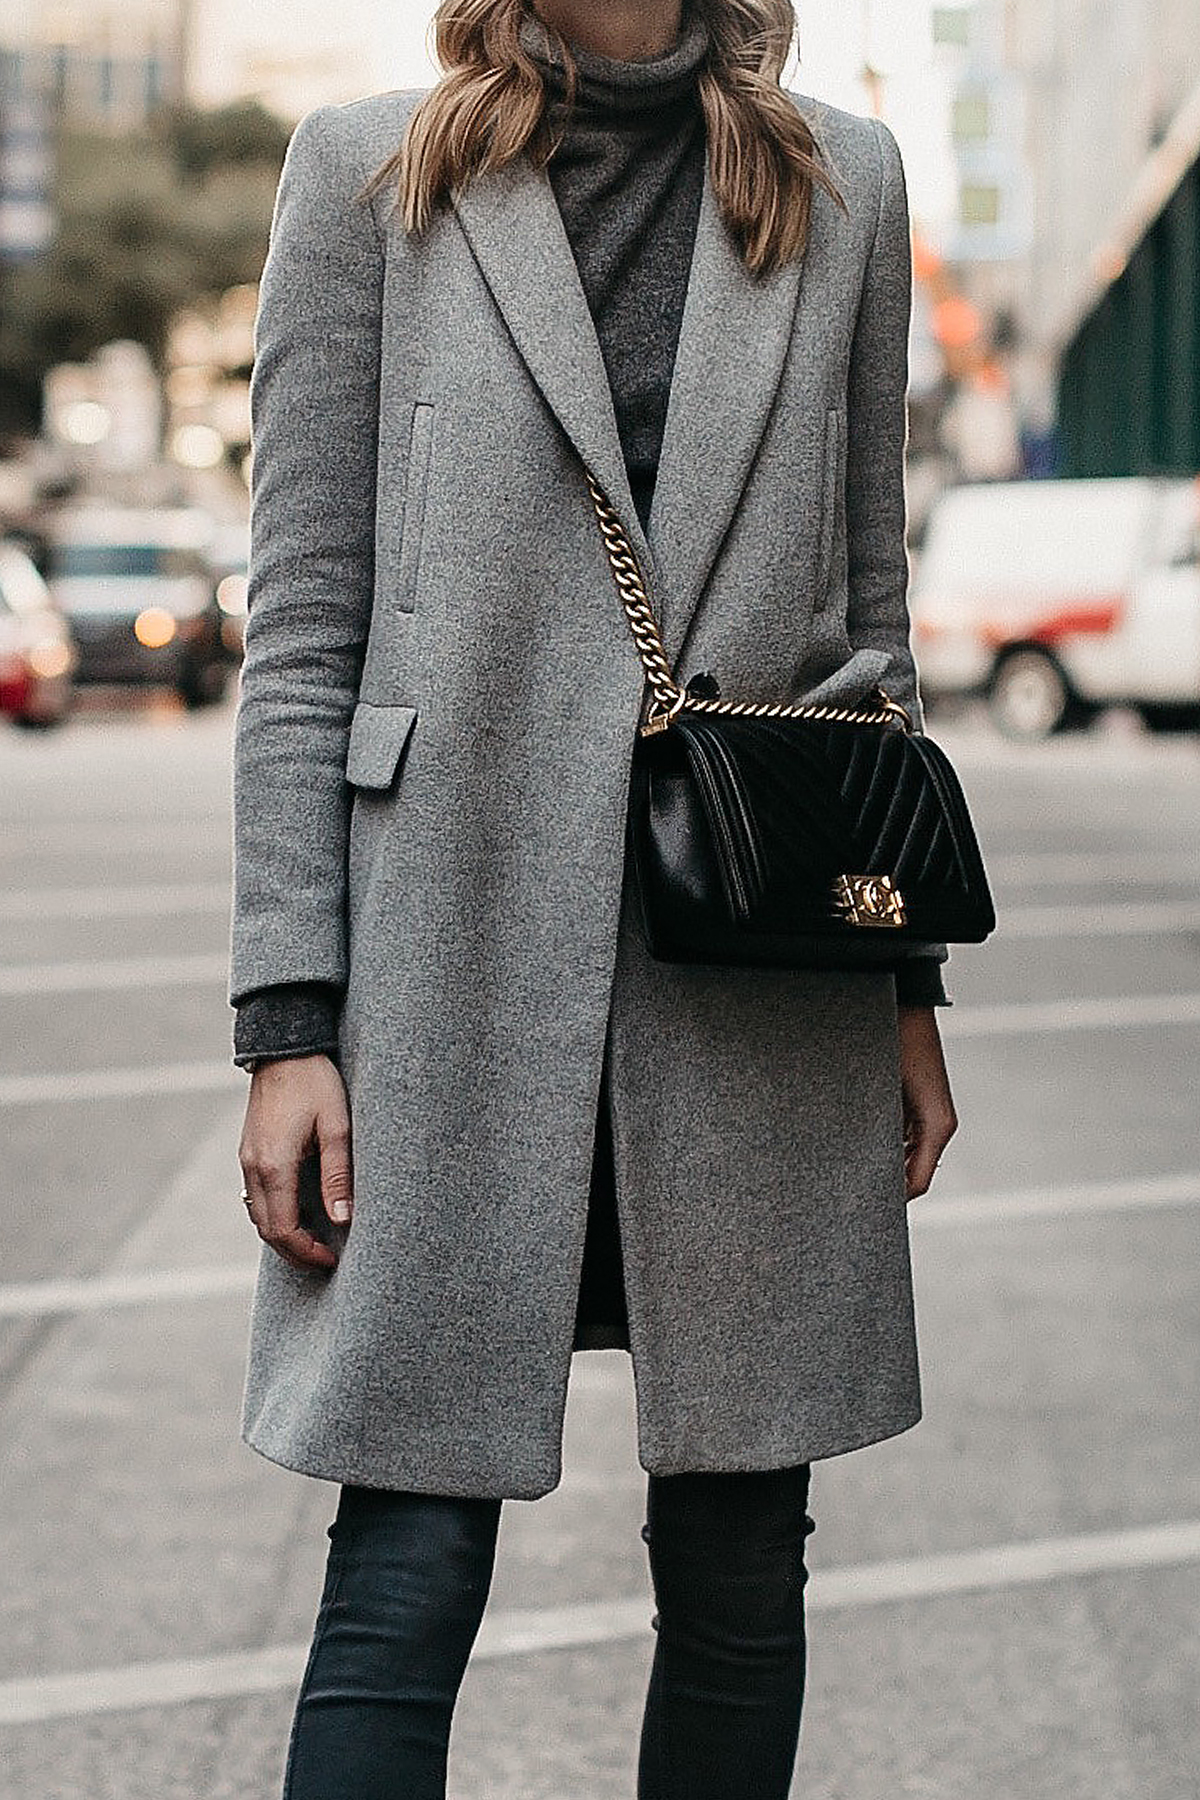 Grey Coat Grey Turtleneck Sweater Black Chanel Boy Bag Fashion Jackson Dallas Blogger Fashion Blogger Street Style